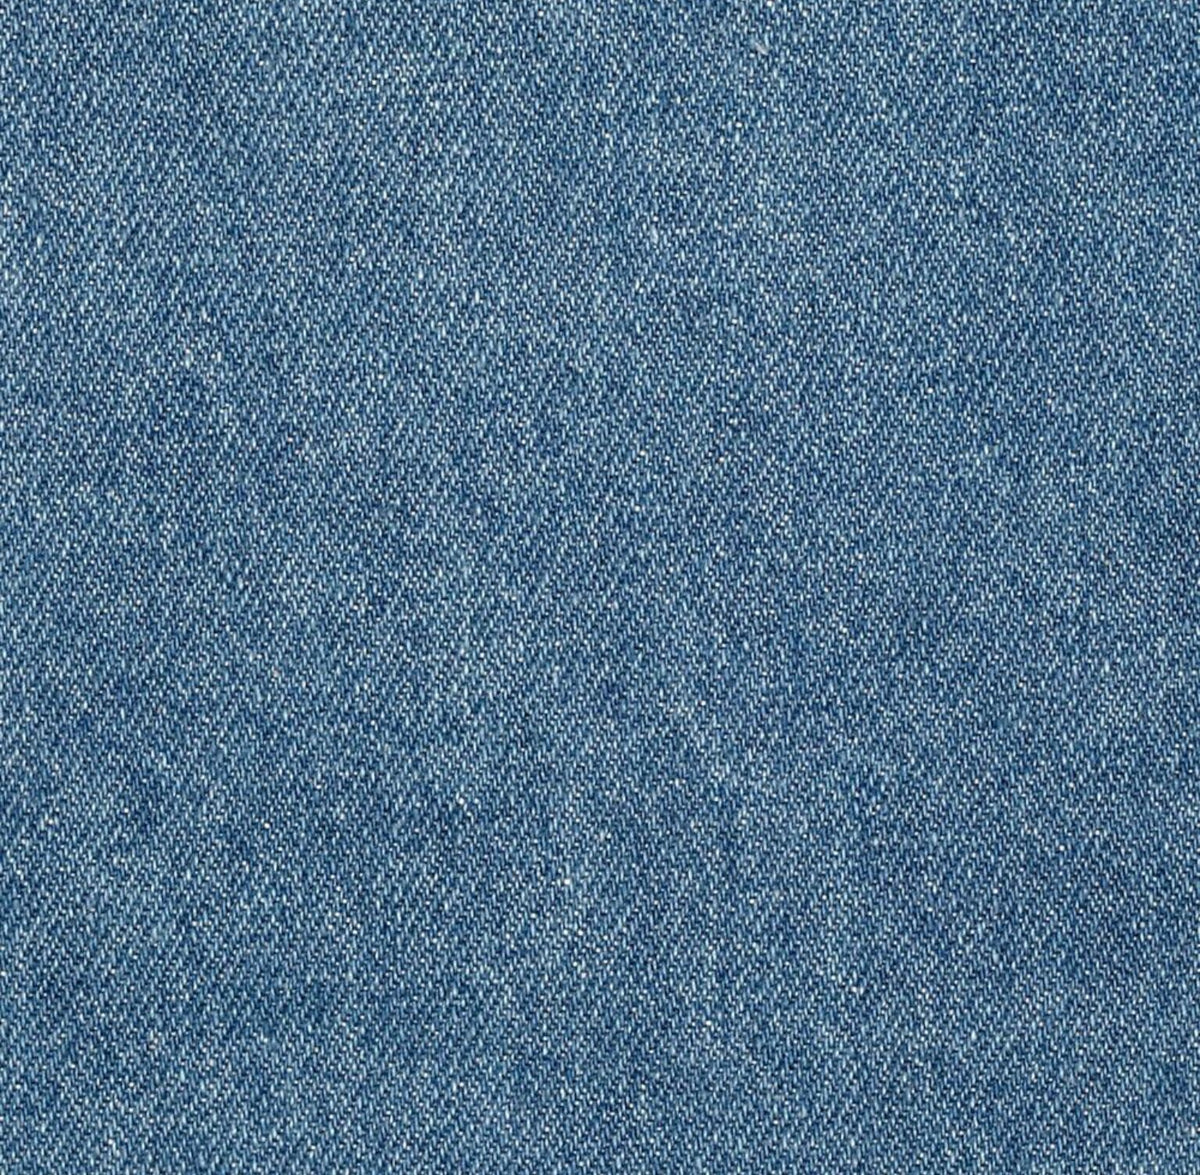 MEDIUM WEIGHT DENIM - FADED DENIM BLUE – The Dressmaker Fabrics